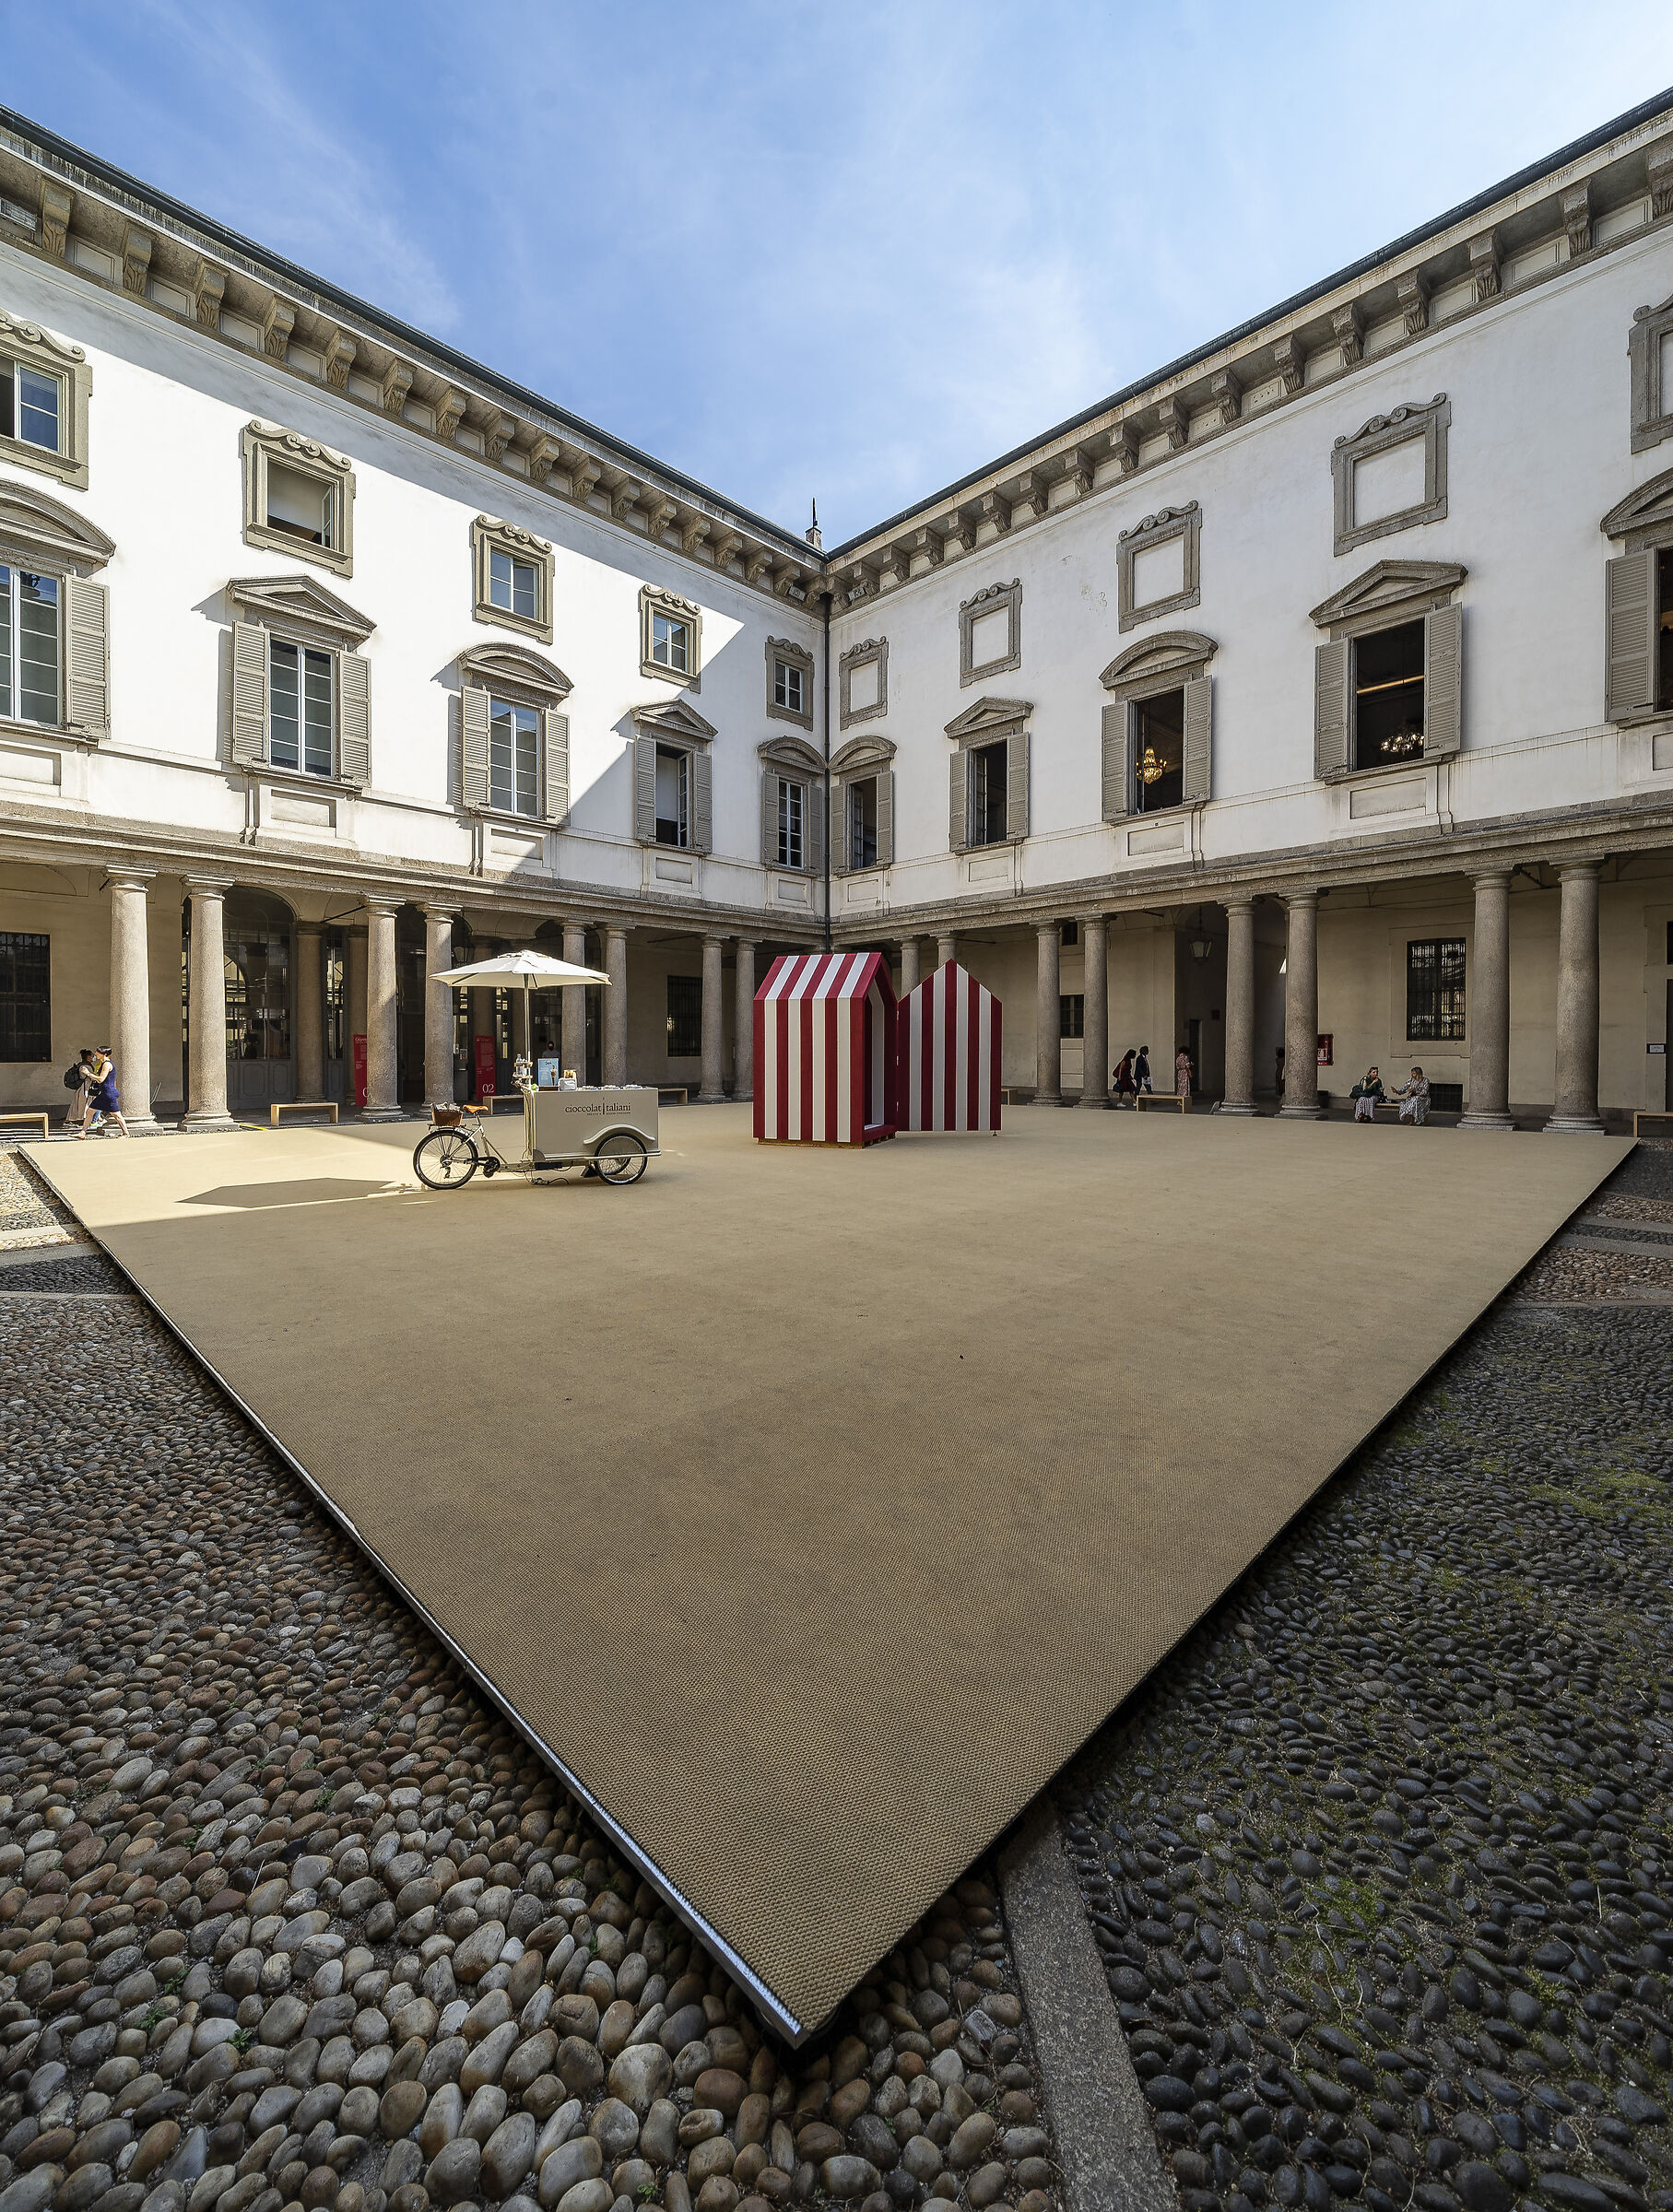 Palazzo Litta - Central courtyard - 1...